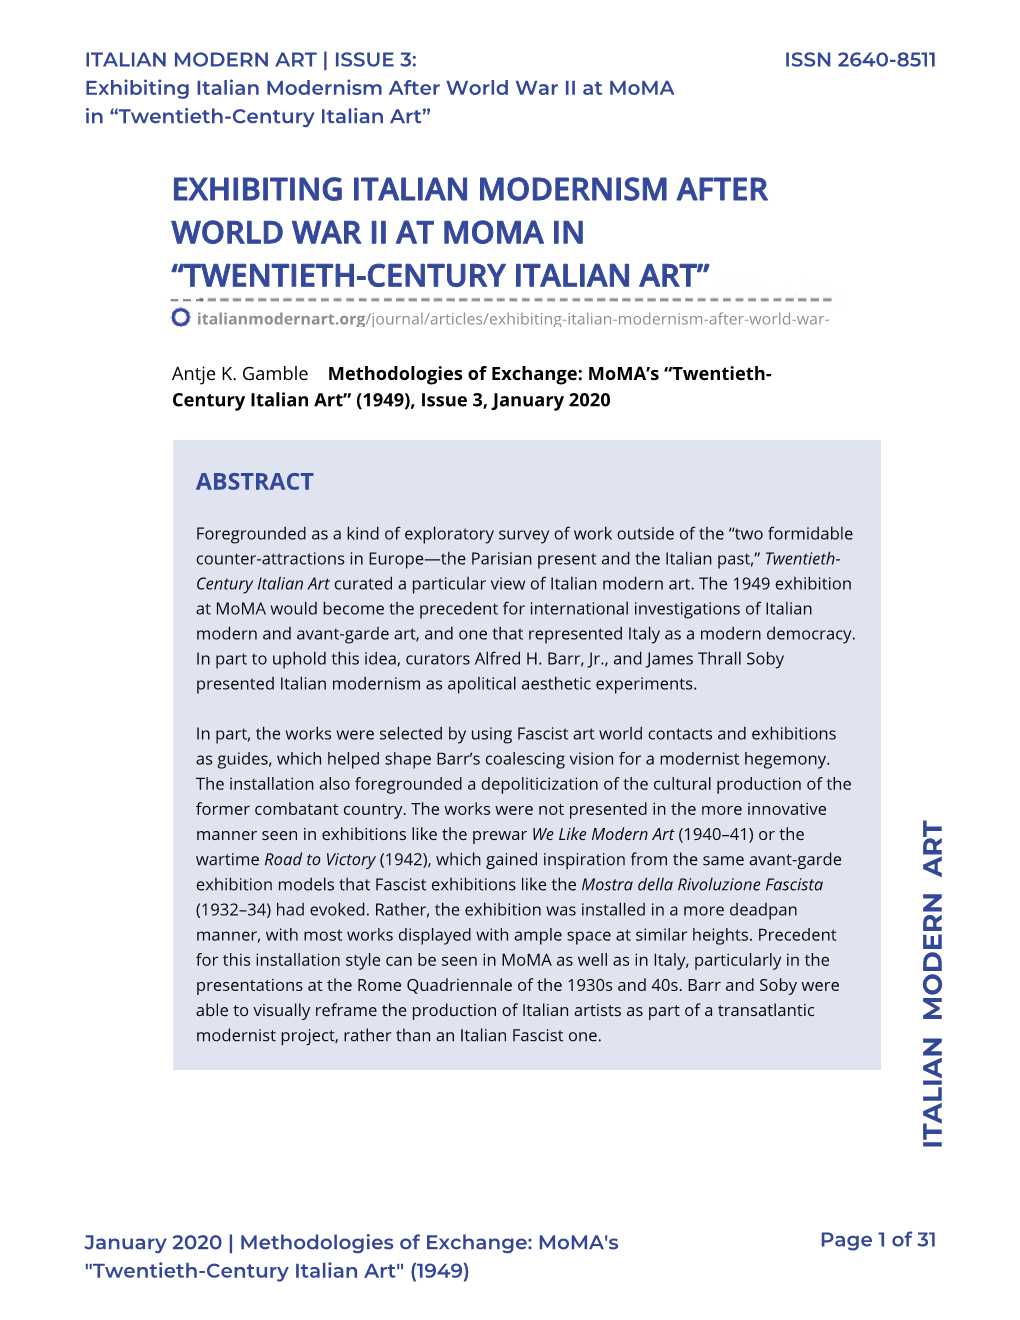 Exhibiting Italian Modernism After World War II at Moma in “Twentieth-Century Italian Art”